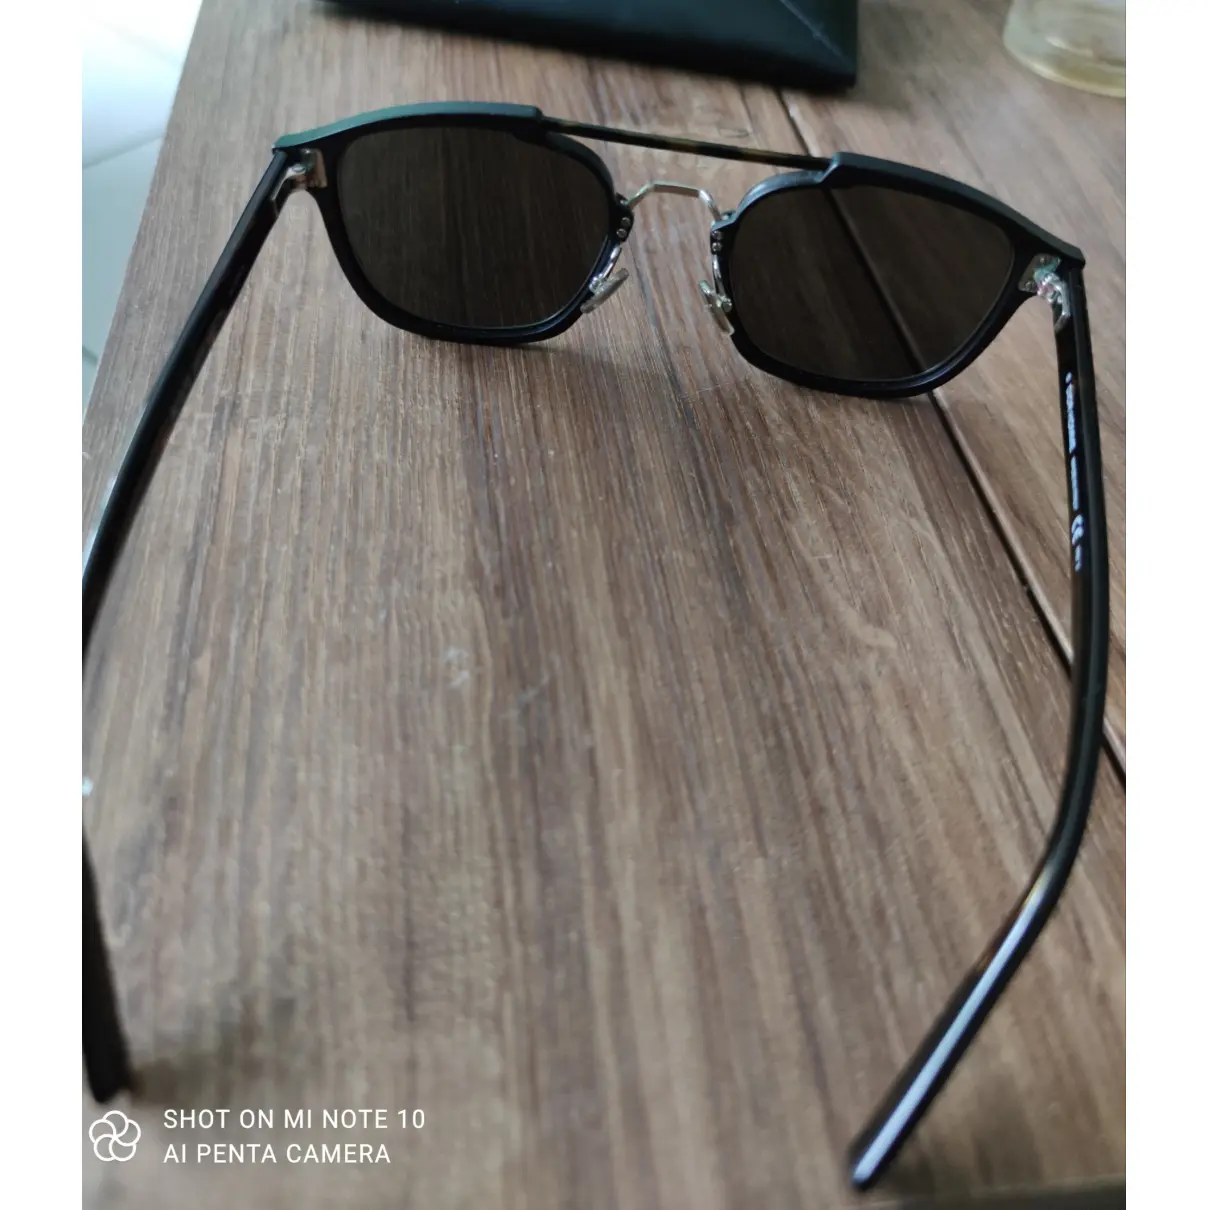 Buy Dior Homme Sunglasses online